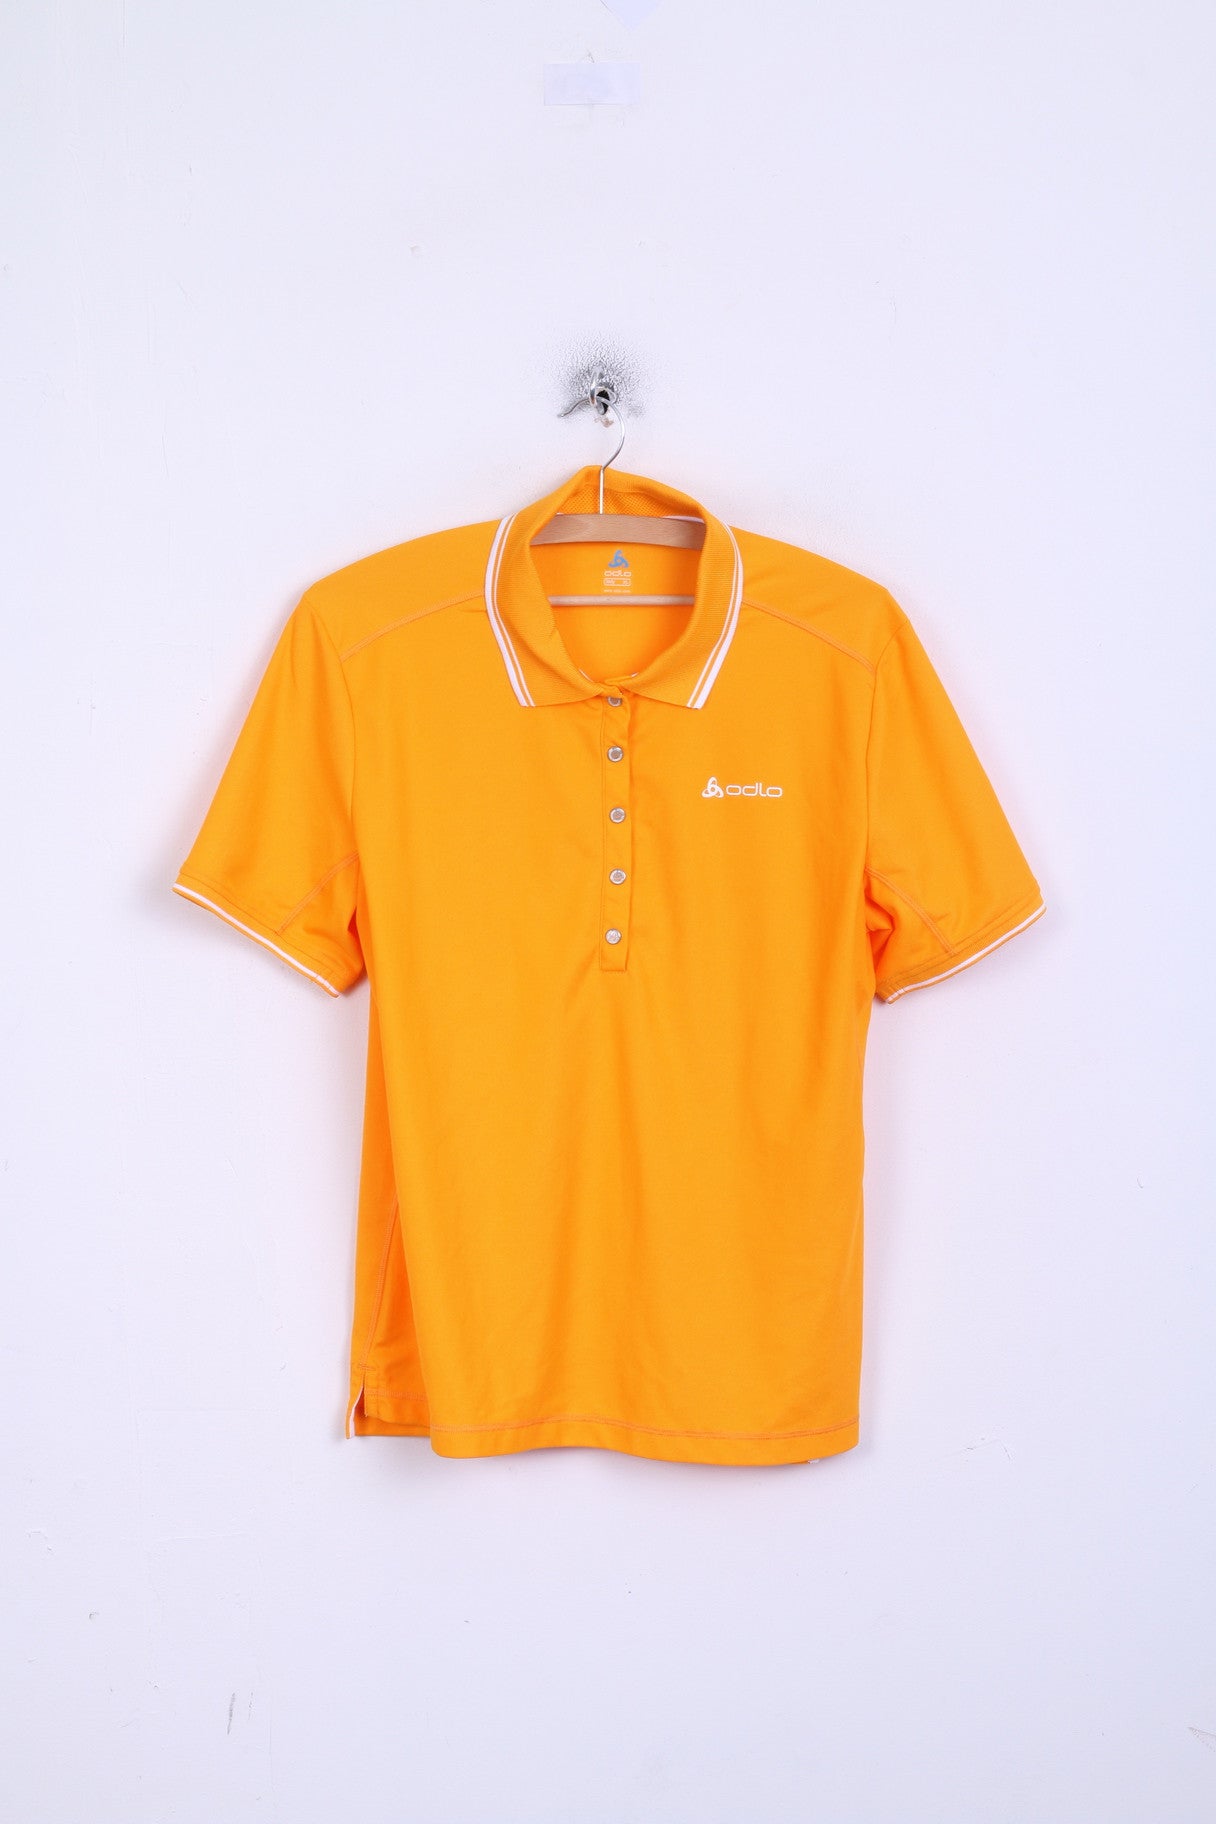 ODLO Womens XL Polo Shirt Orange Sport Buttons